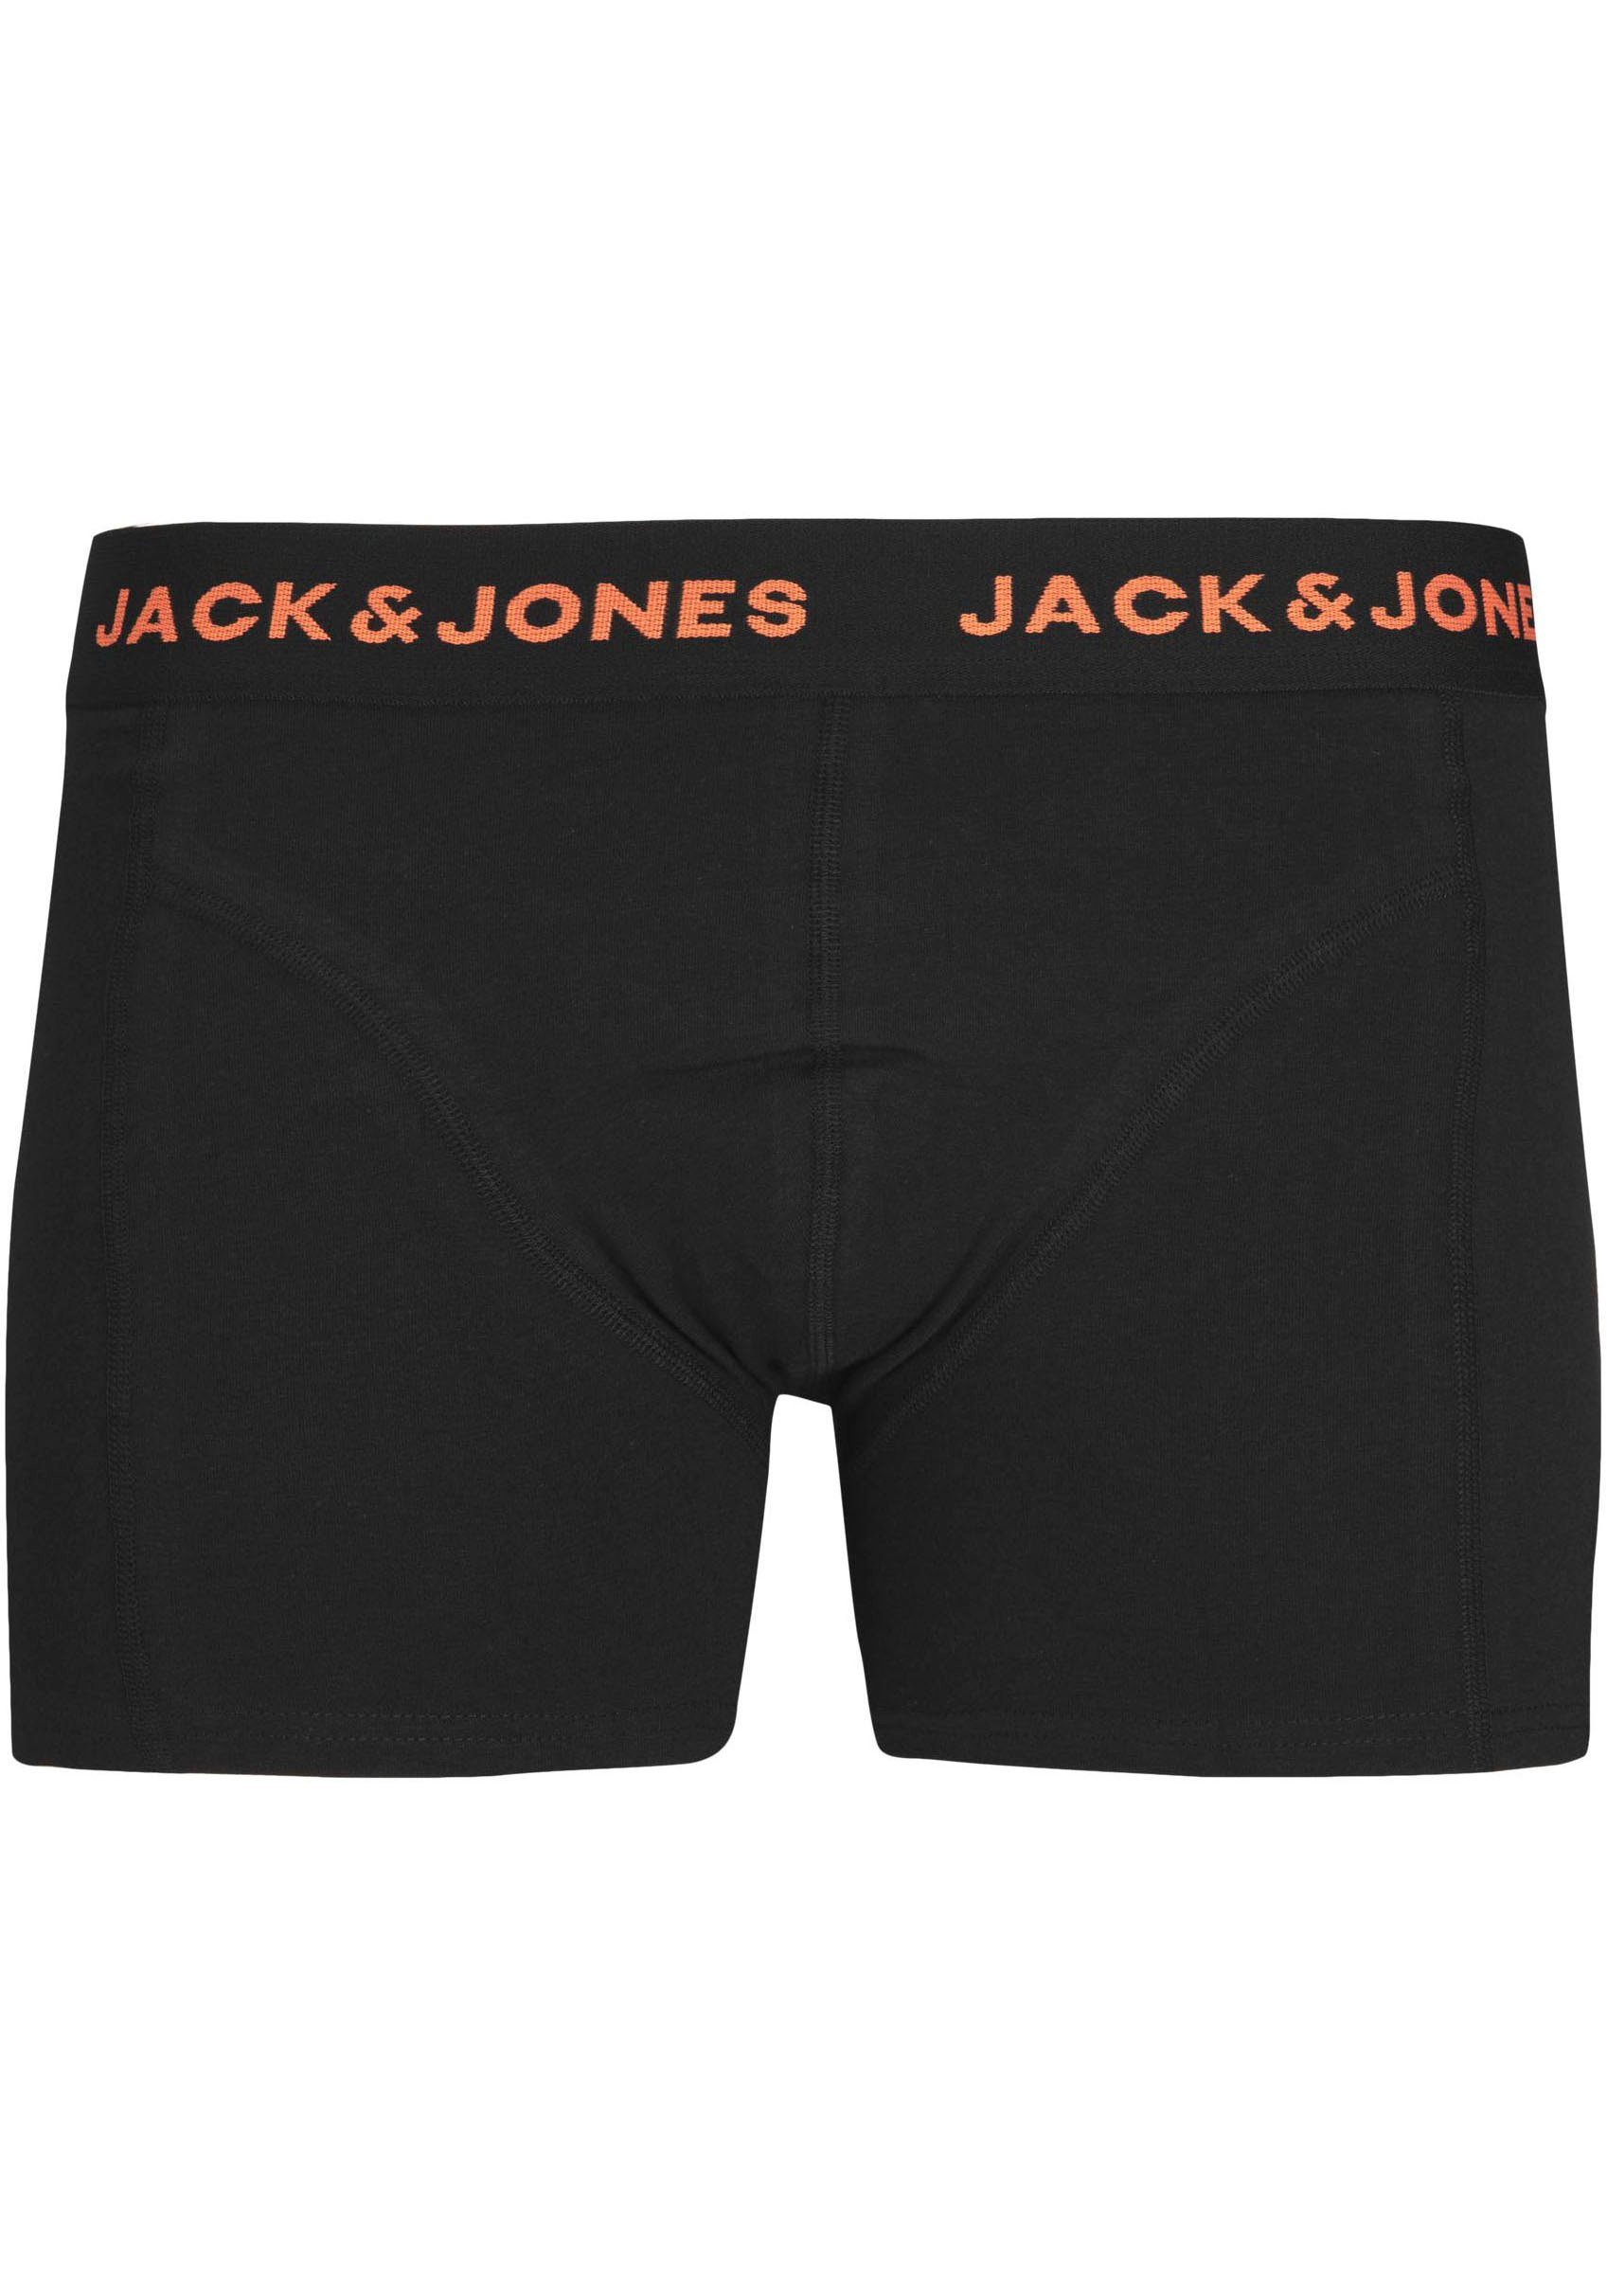 TRUNKS Jack Boxershorts Jones & 3-St) (Packung, Junior LOGO PAC JACNEON 3